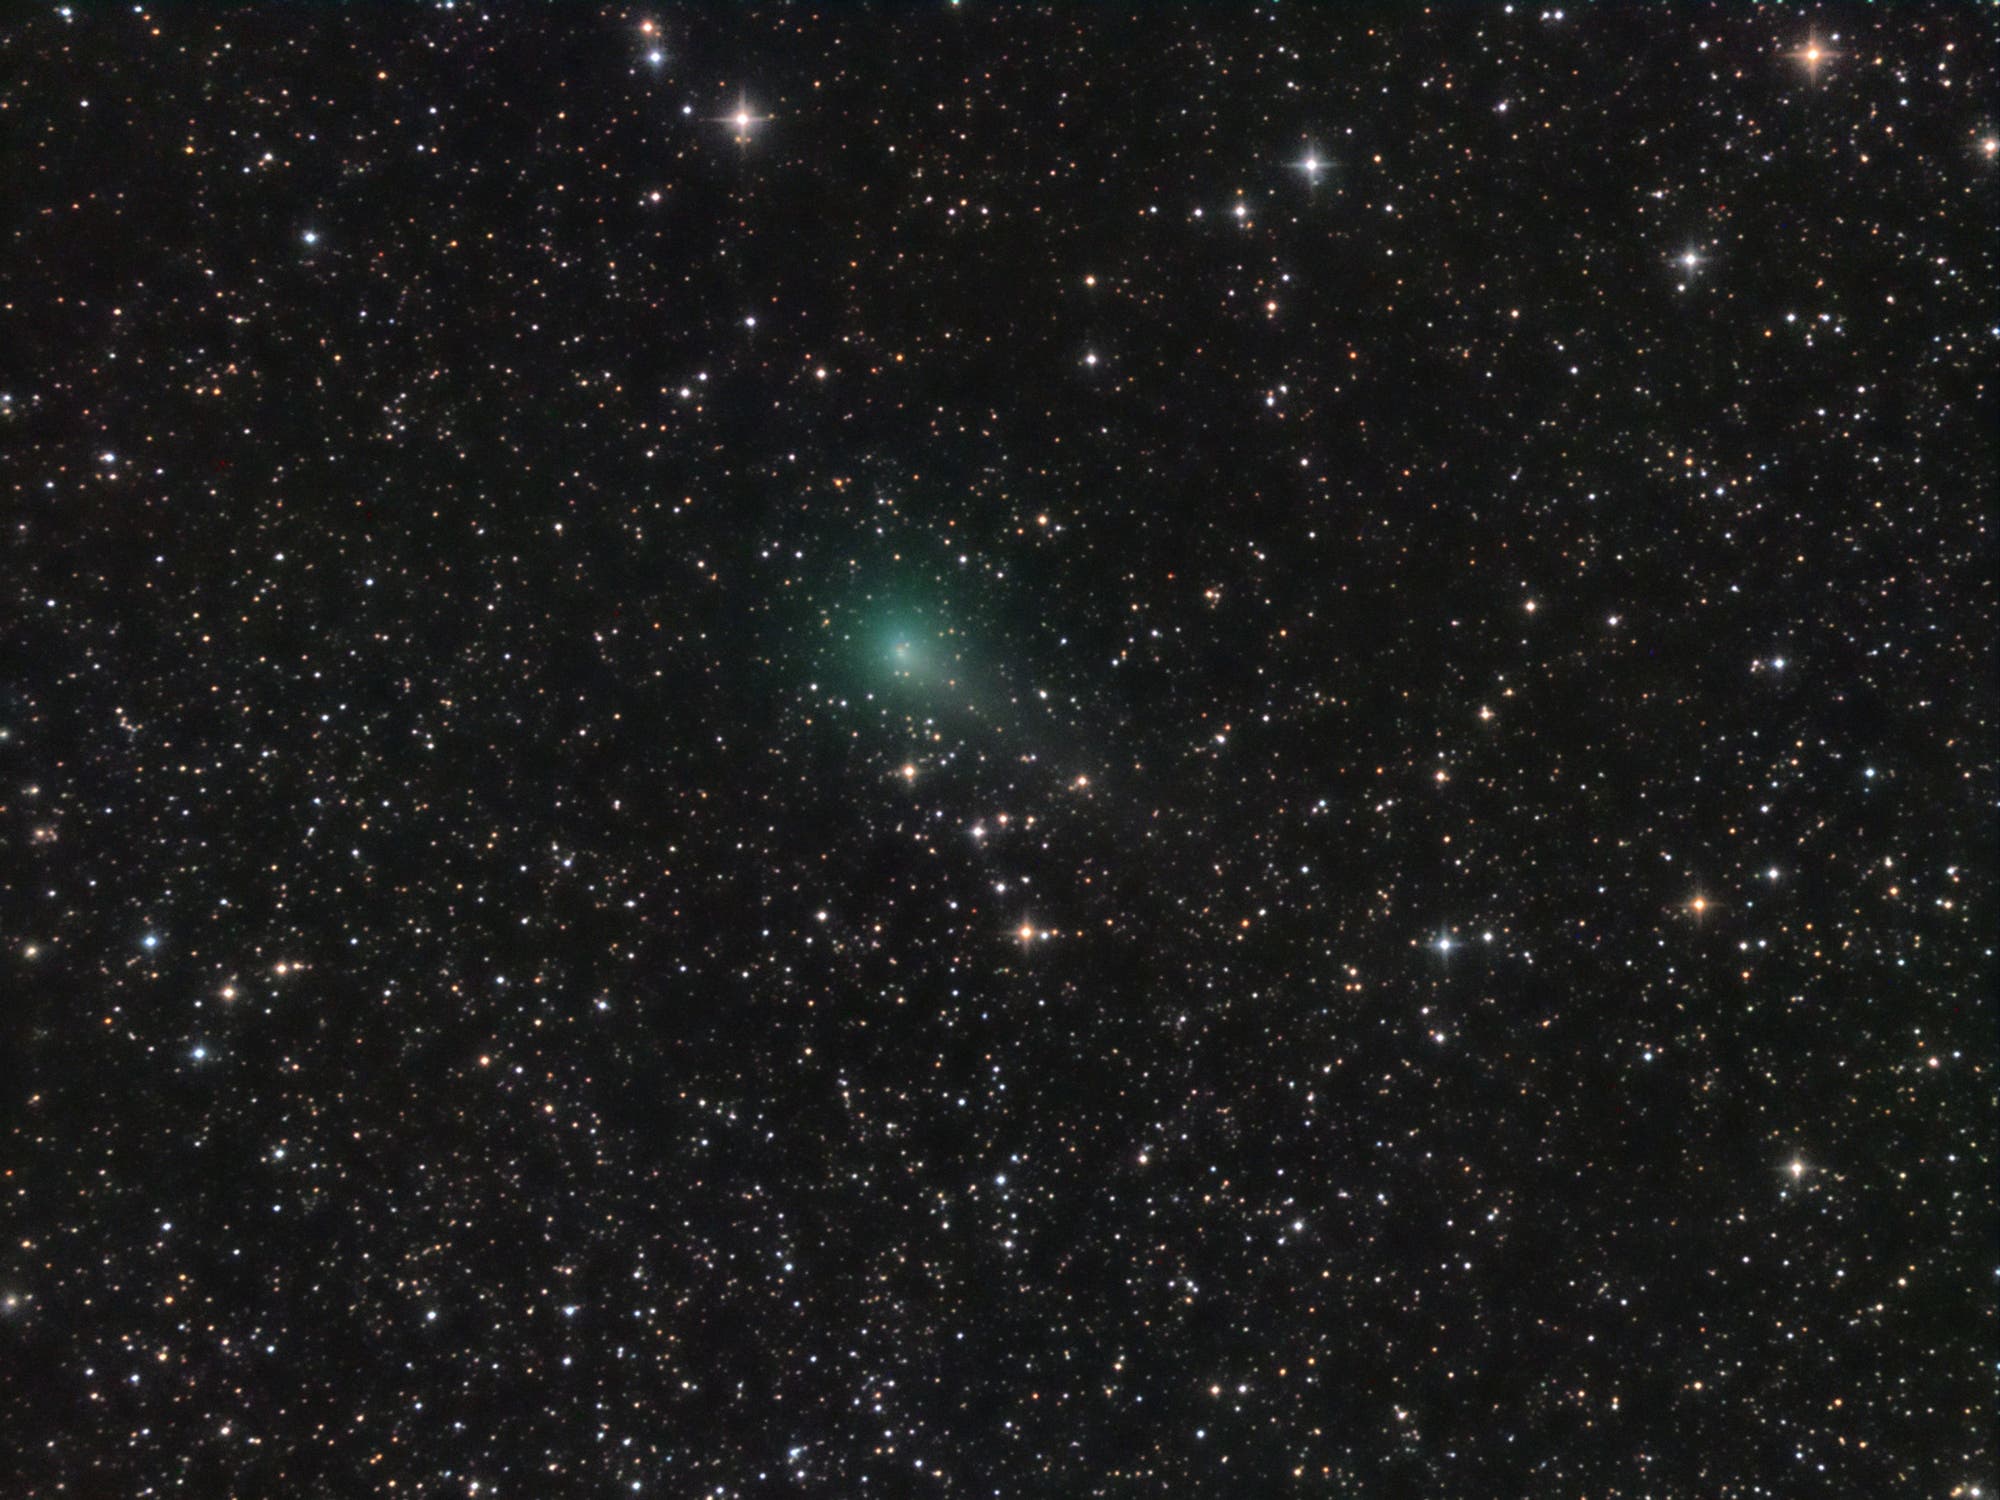 Comet C/2017 O1 (ASASSN)